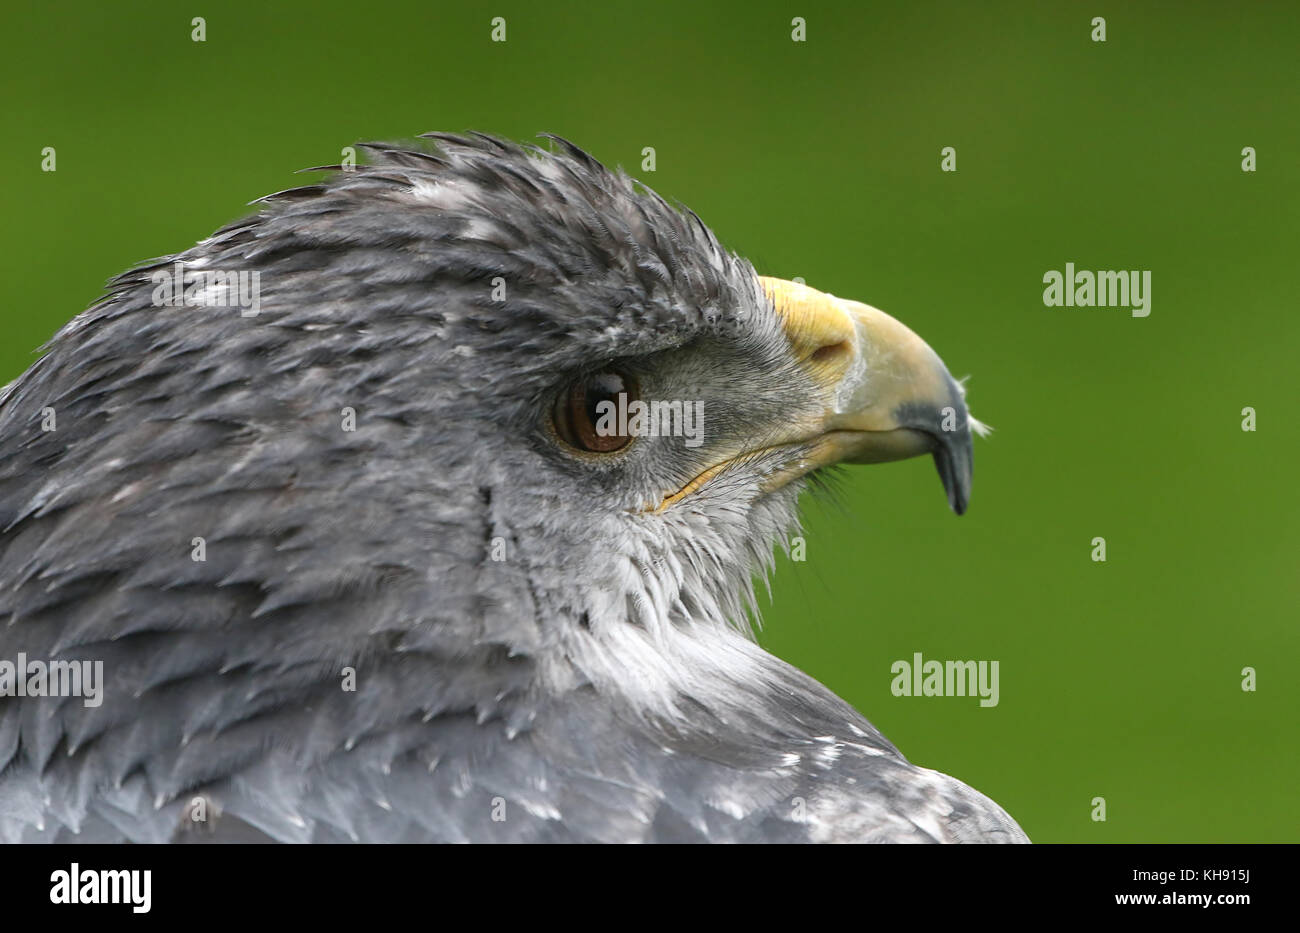 Femmina blu cileno eagle (Geranoaetus melanoleucus) a.k.a. Grigio o nero chested buzzard eagle. Foto Stock